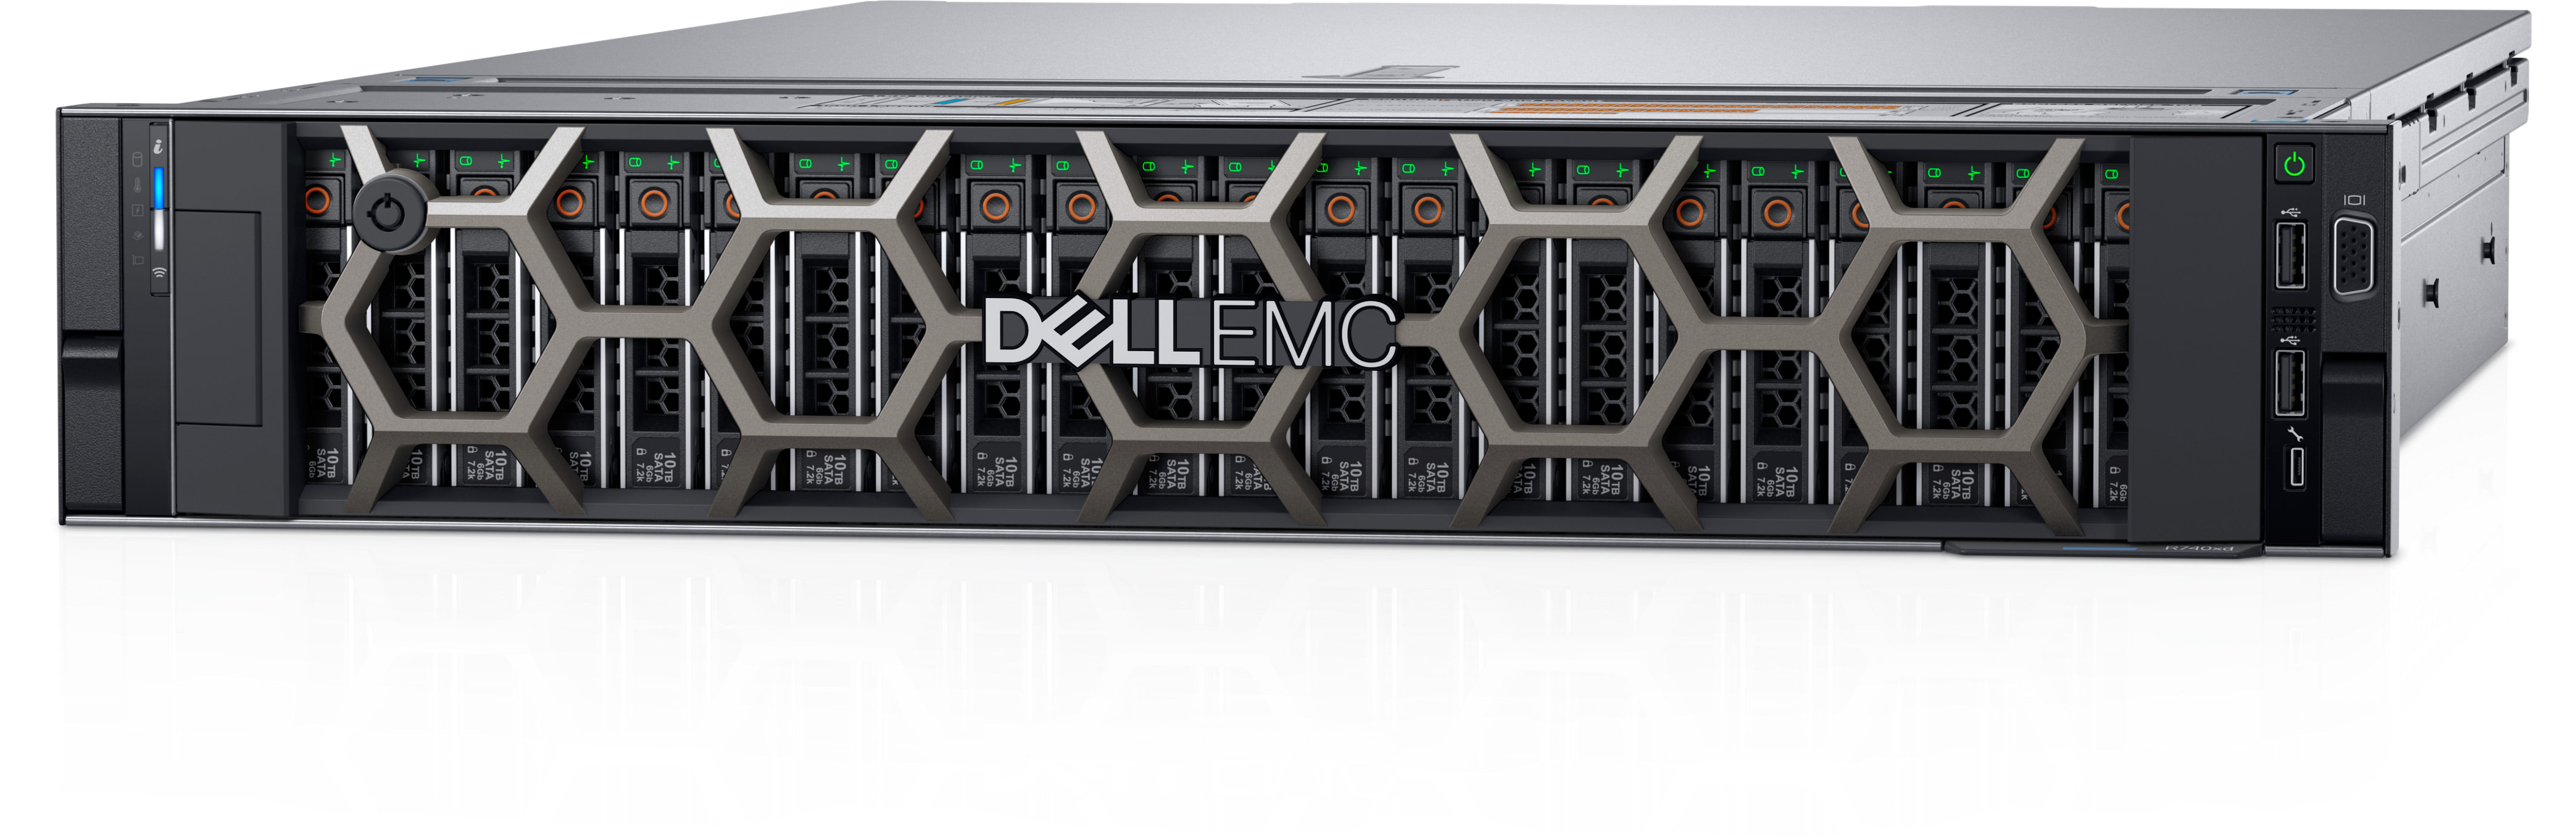 RAM Mounts New Dell PowerEdge R740xd Server 2x 16-Core Gold 6246R 256GB Ram 2U Server 